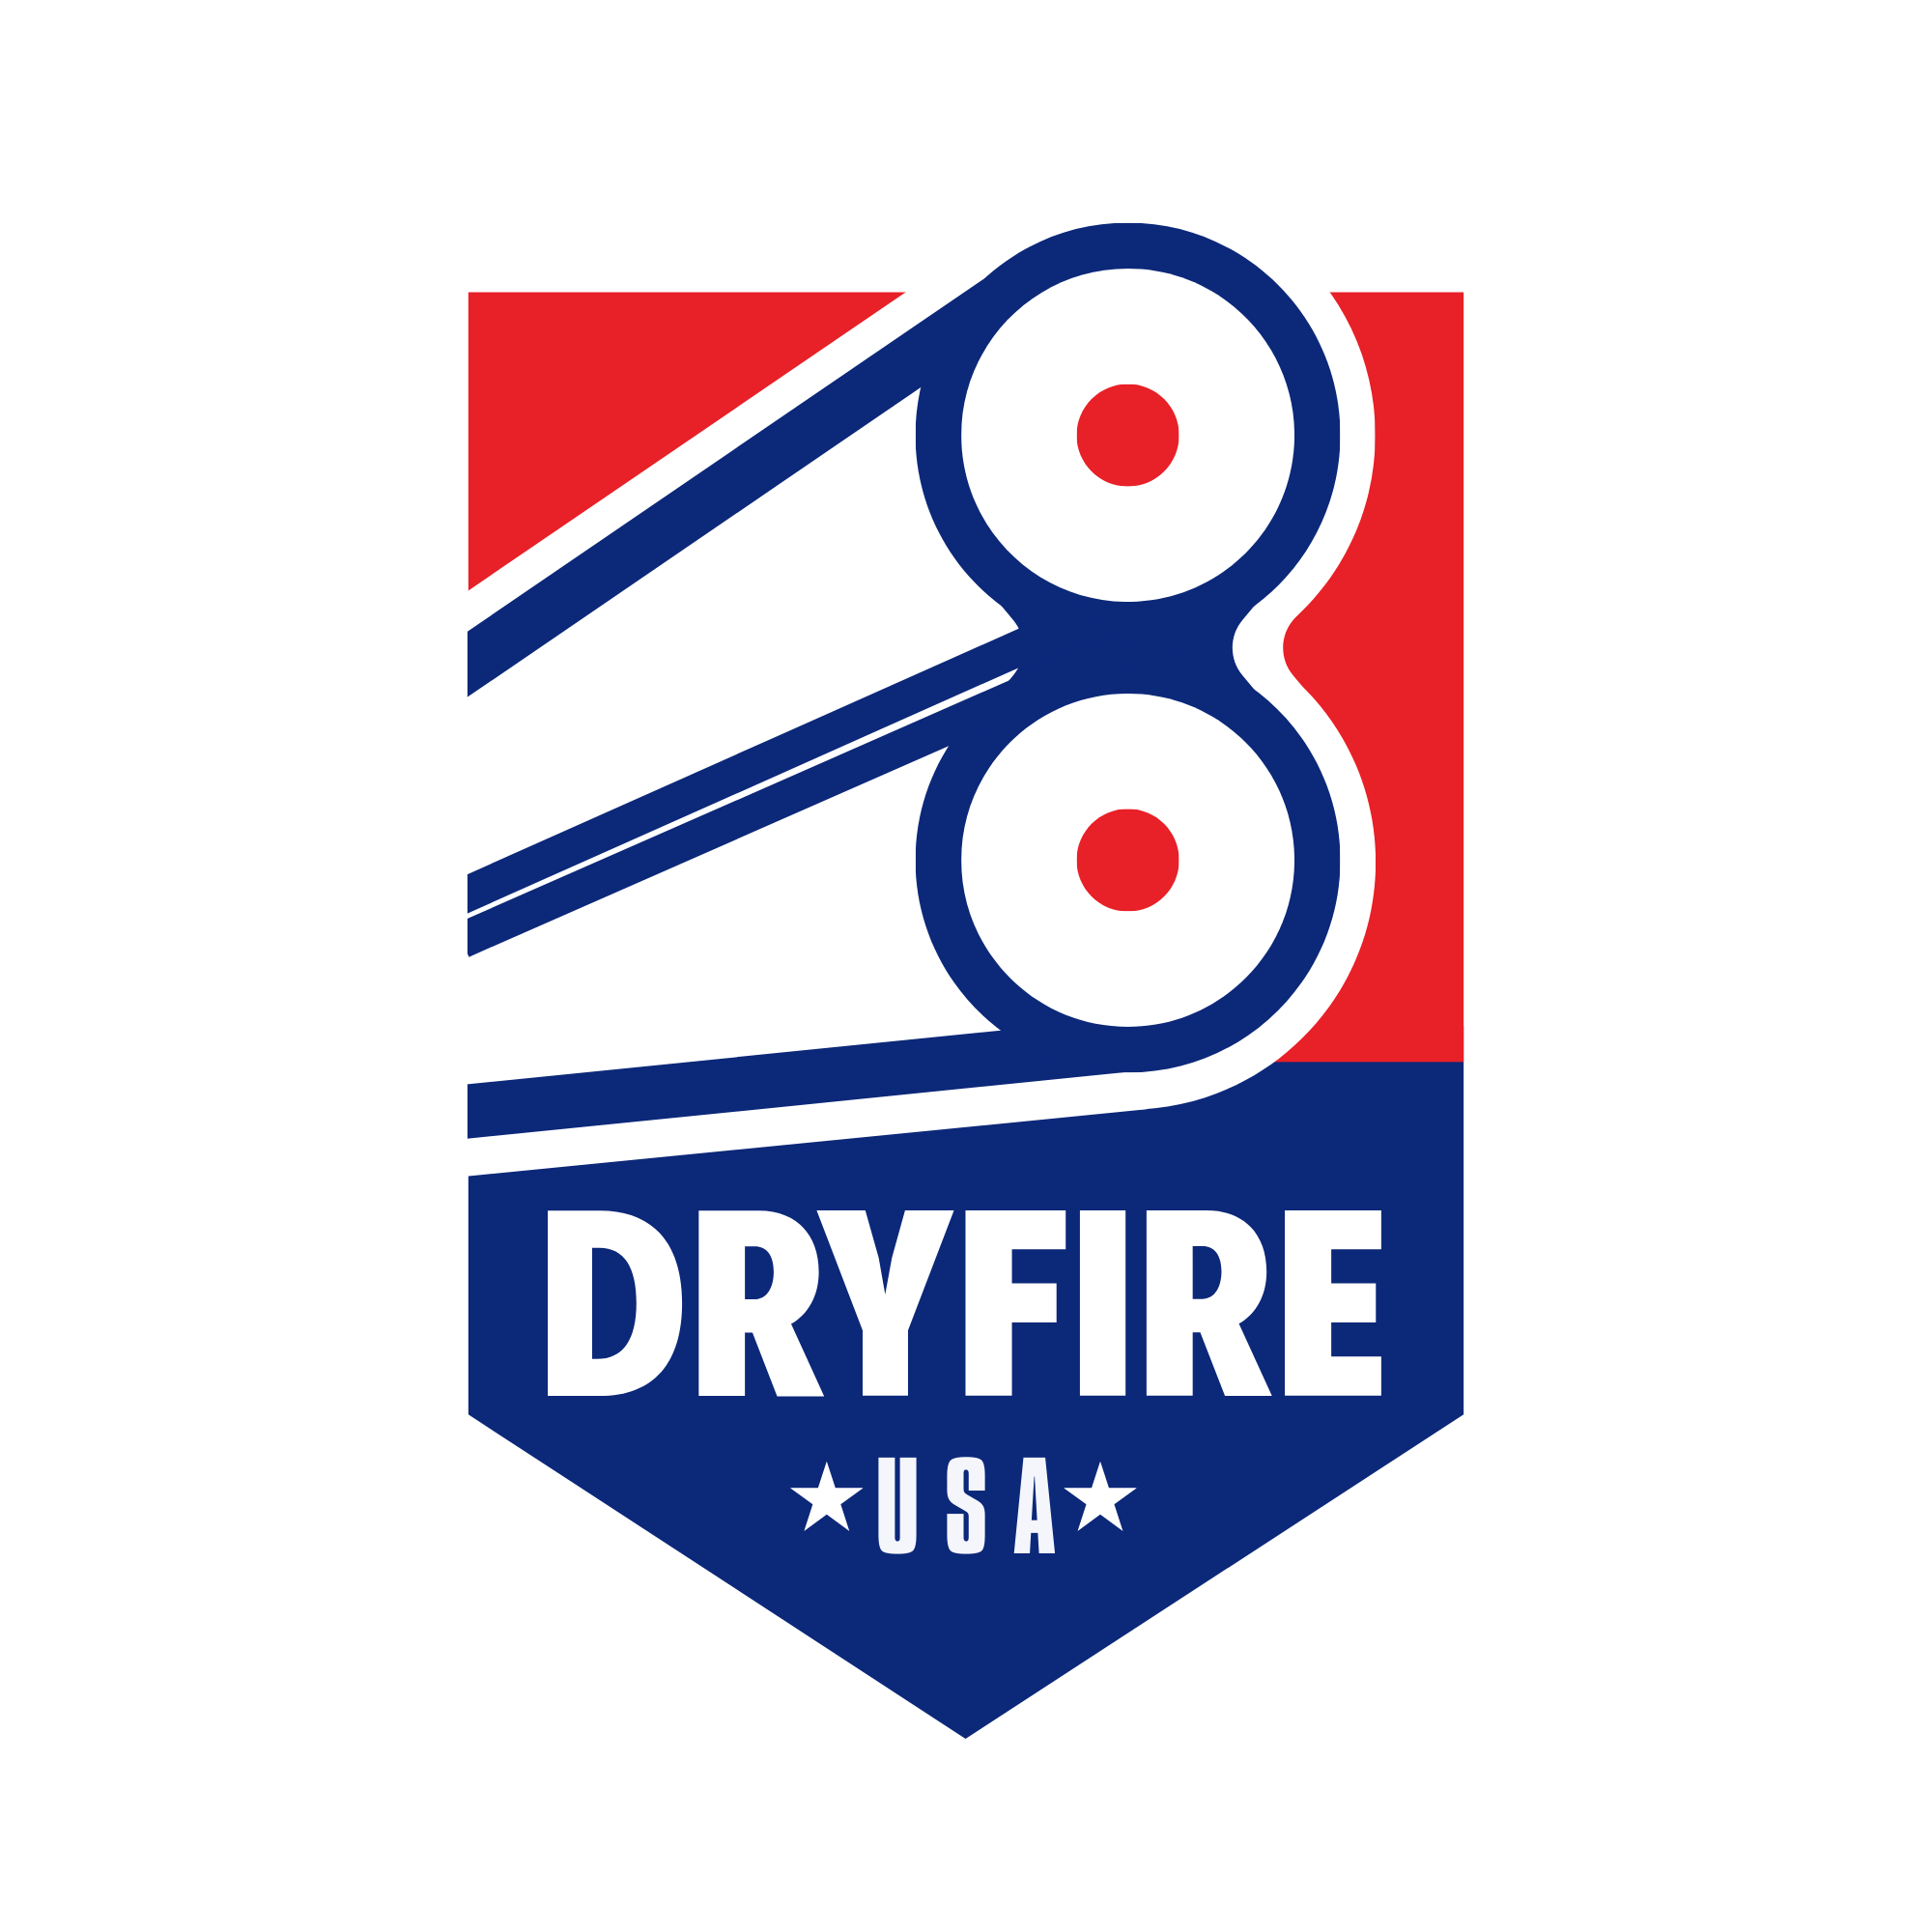 Dryfire USA Logo - Target Simulators for Trap, Skeet, Sporting Clays and more